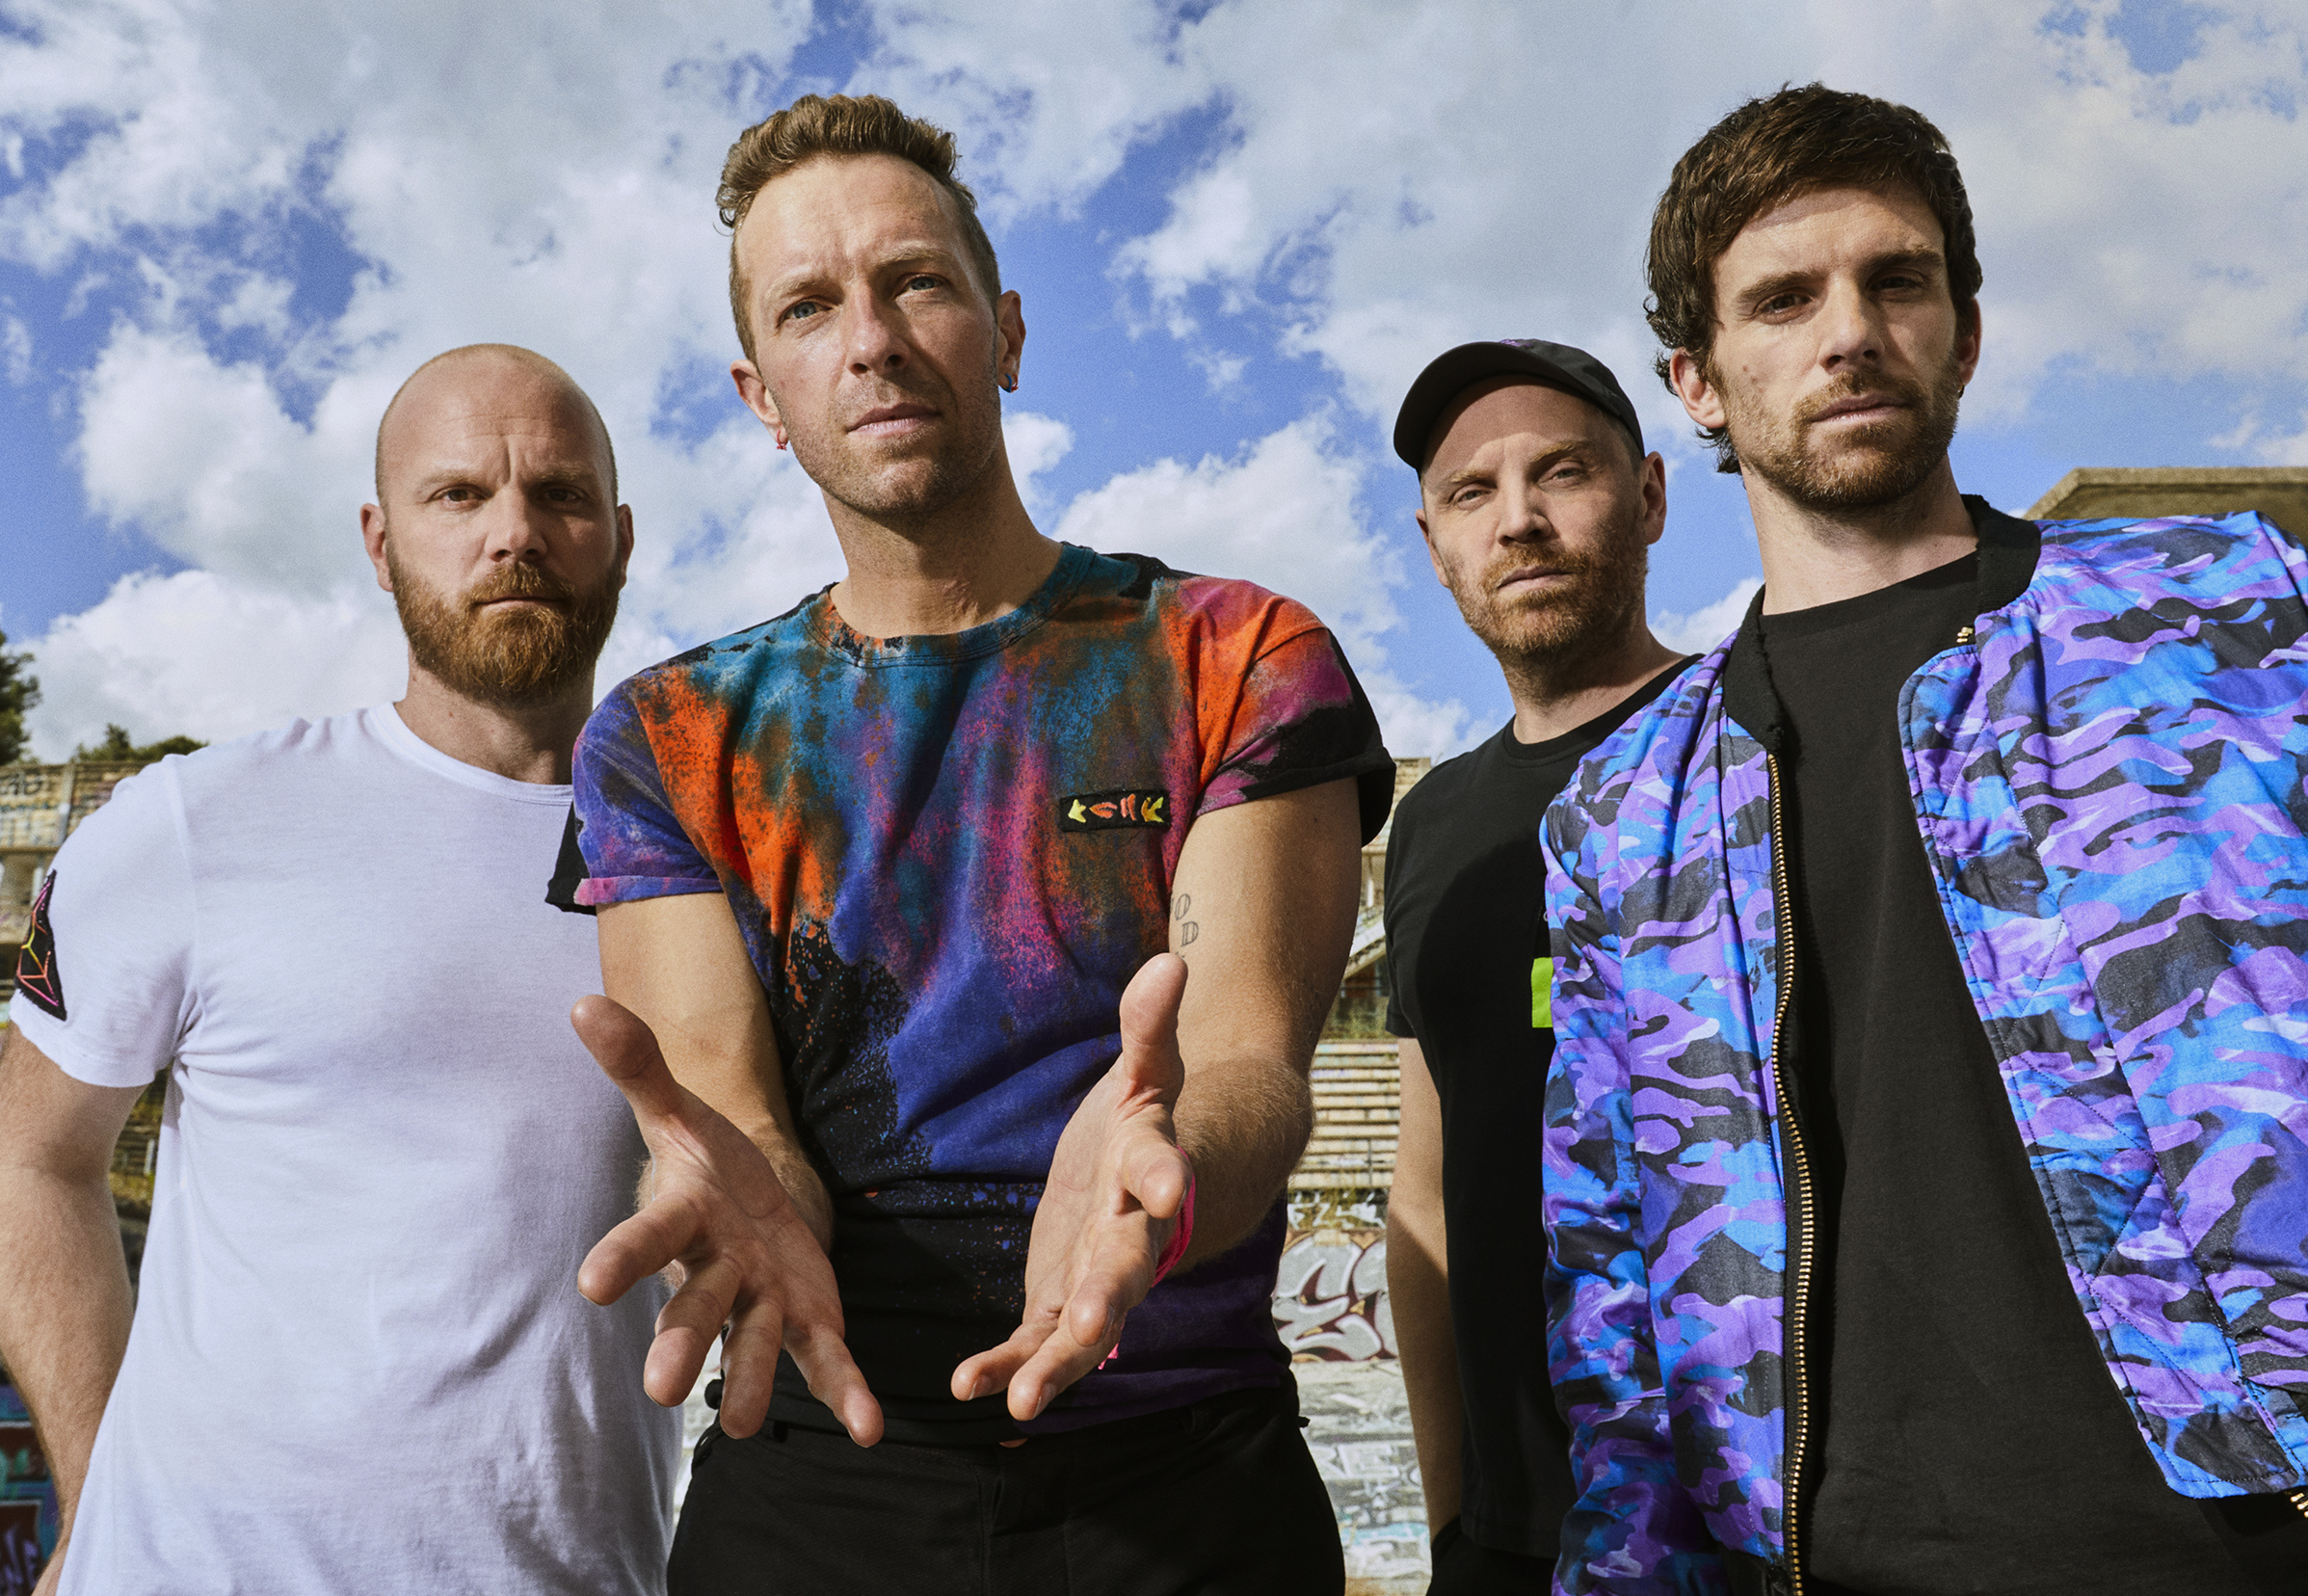 Music of Spheres, il nuovo album dei Coldplay attesi a X Factor 2021